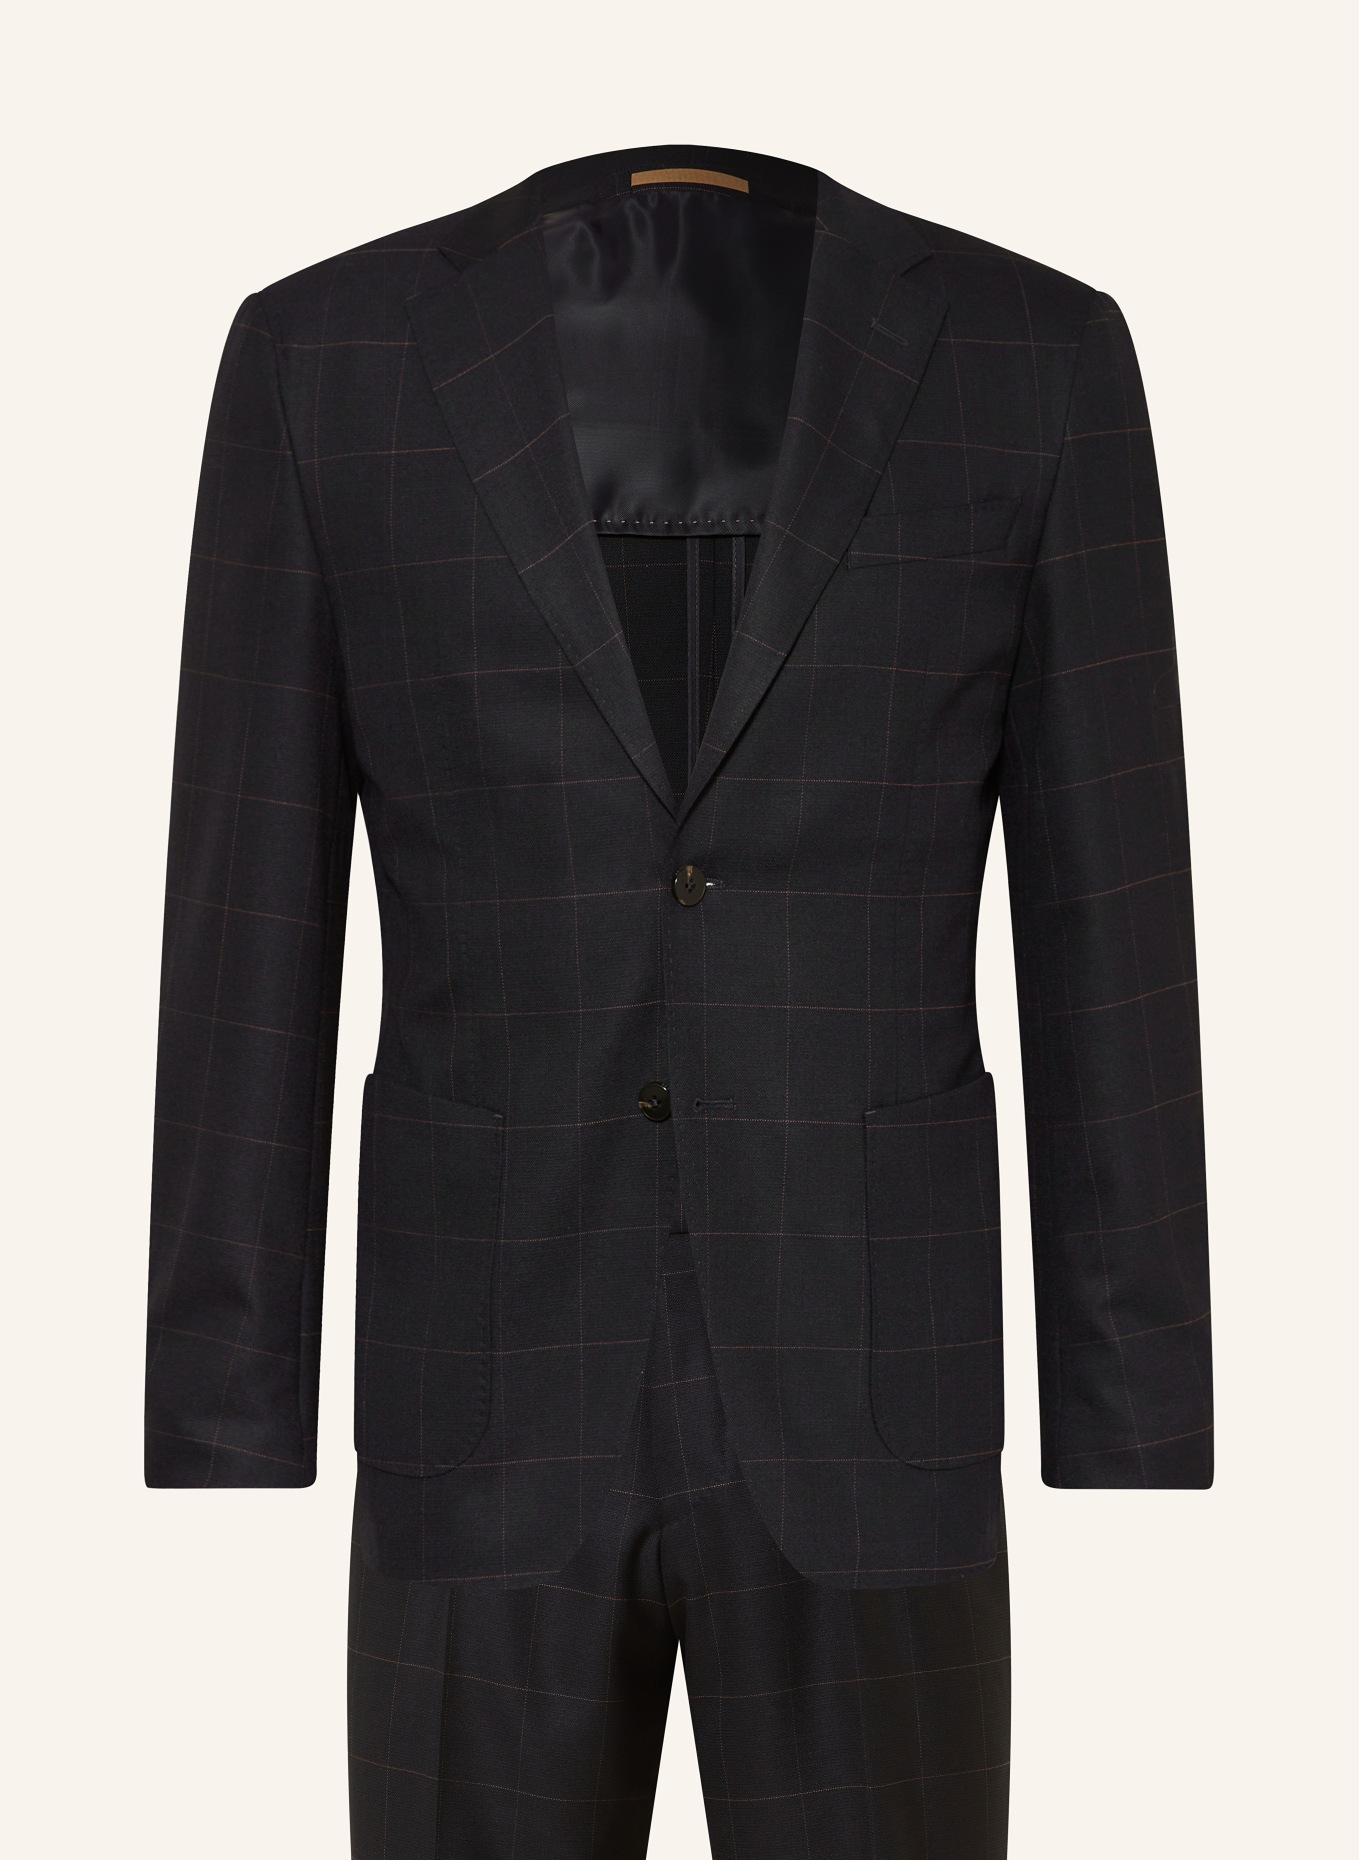 Black & Dark Gray Viscose Stripes Fabric Material Suit Jacket Ties Bags  Lining